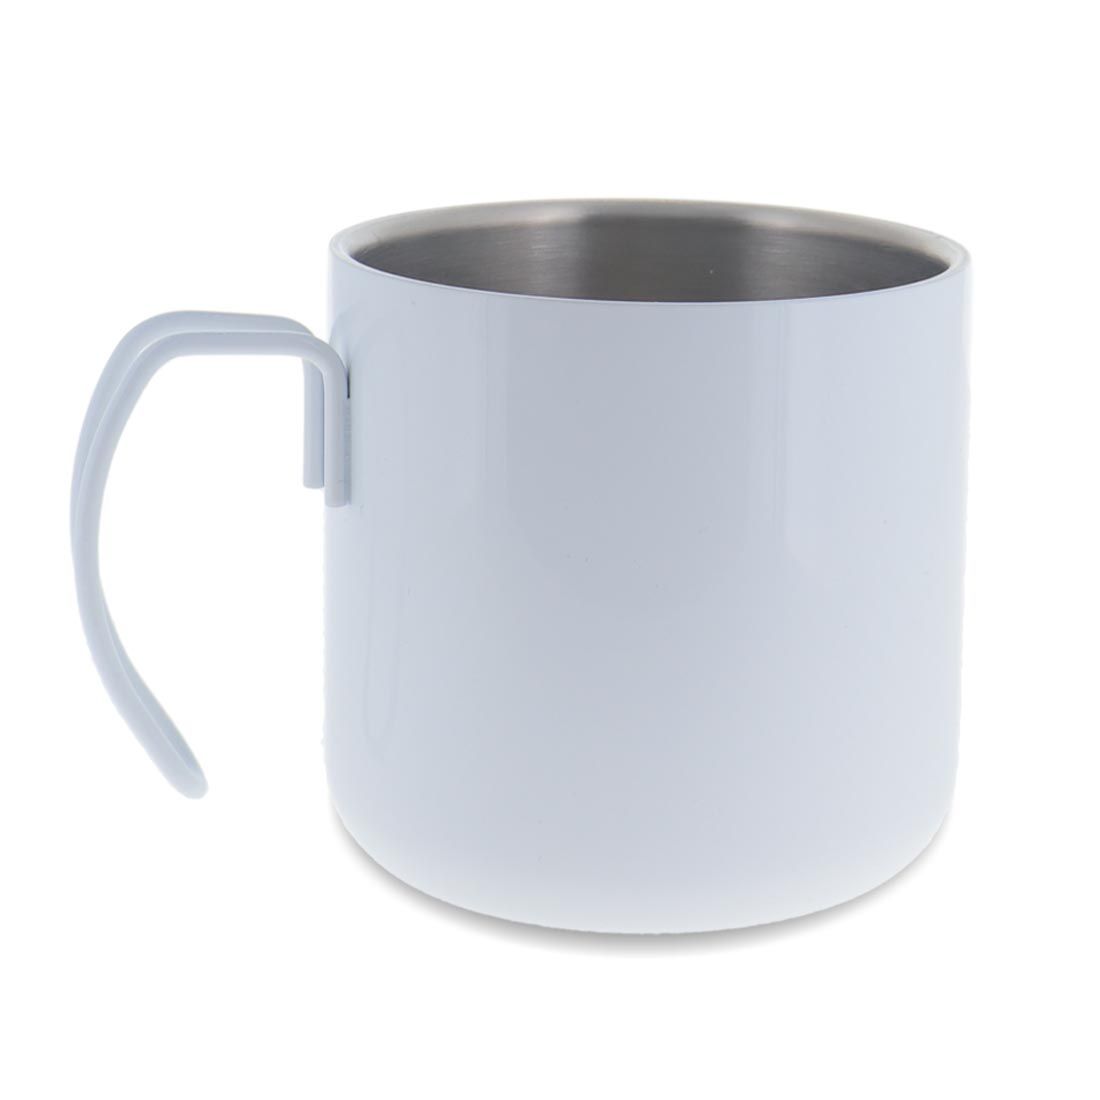 Sublimation Enamel Mugs cups Stainless steel white metal mug dye